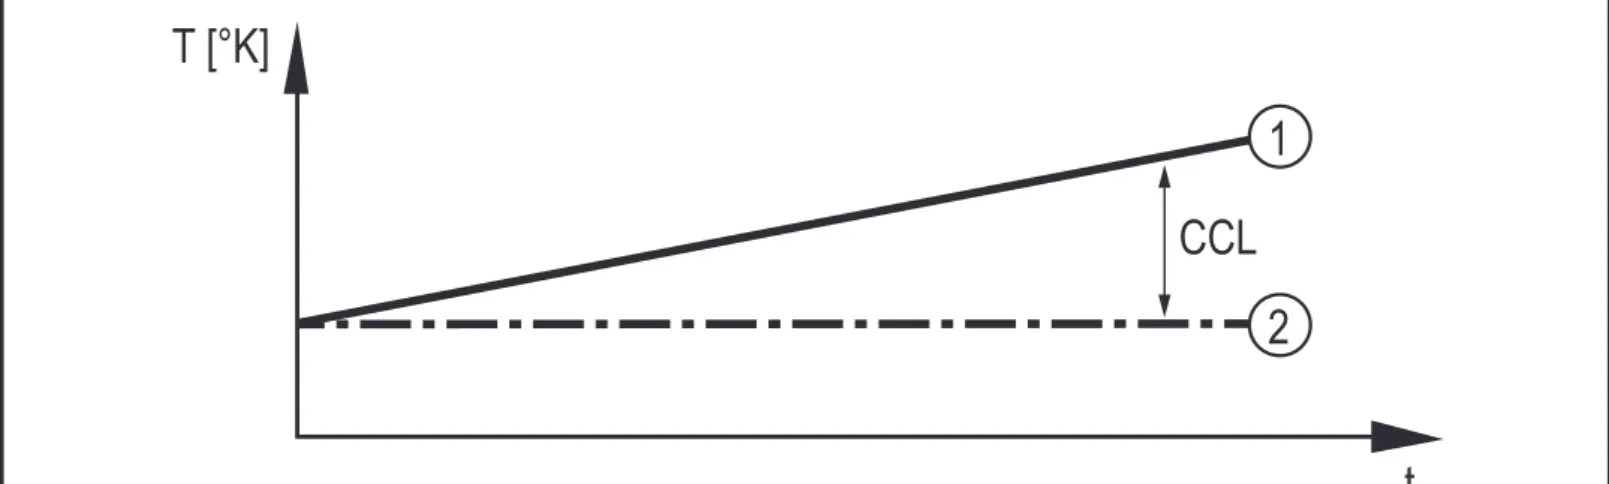 Figure 2: Calibration check function